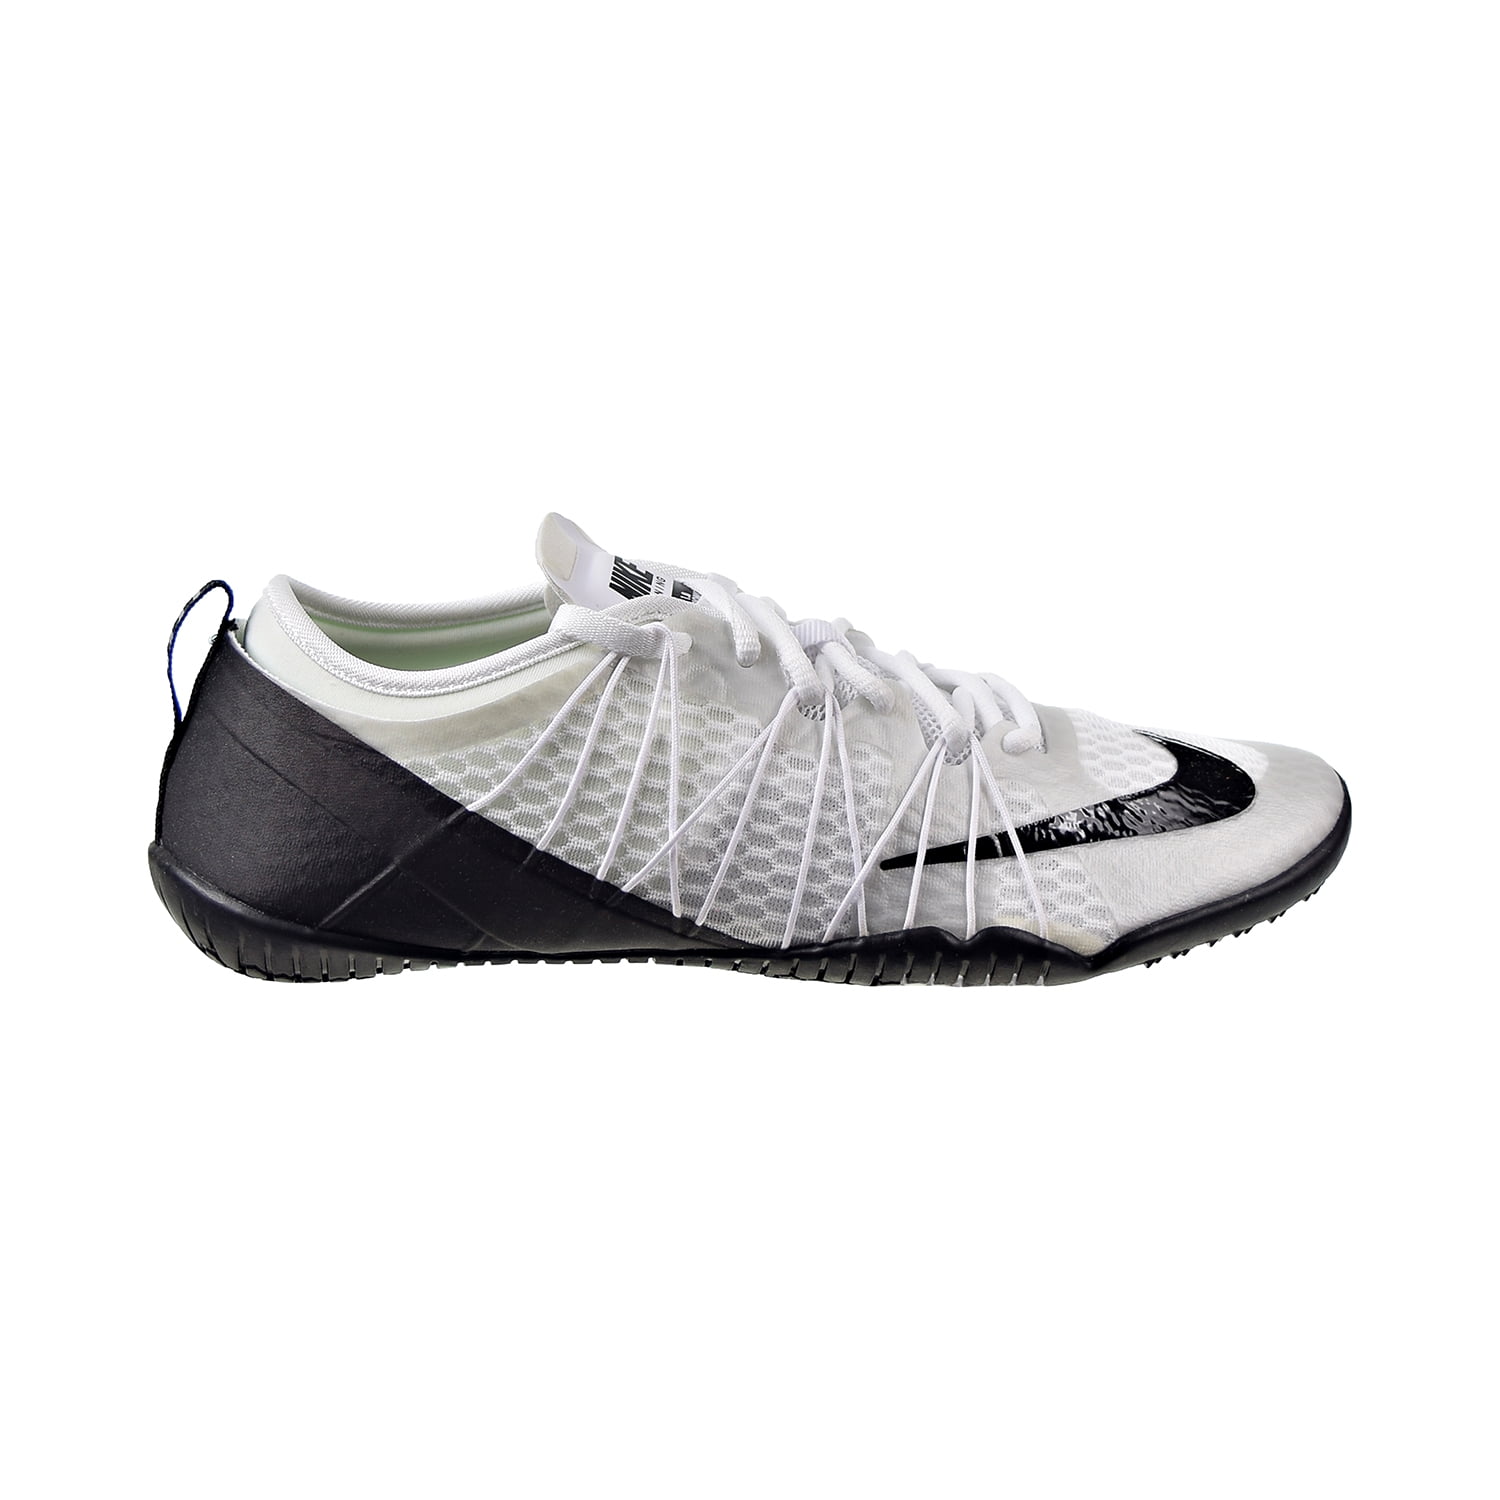 Nike Women's Free Bionic 2 Running Shoes White-Black 718841-100 - Walmart.com